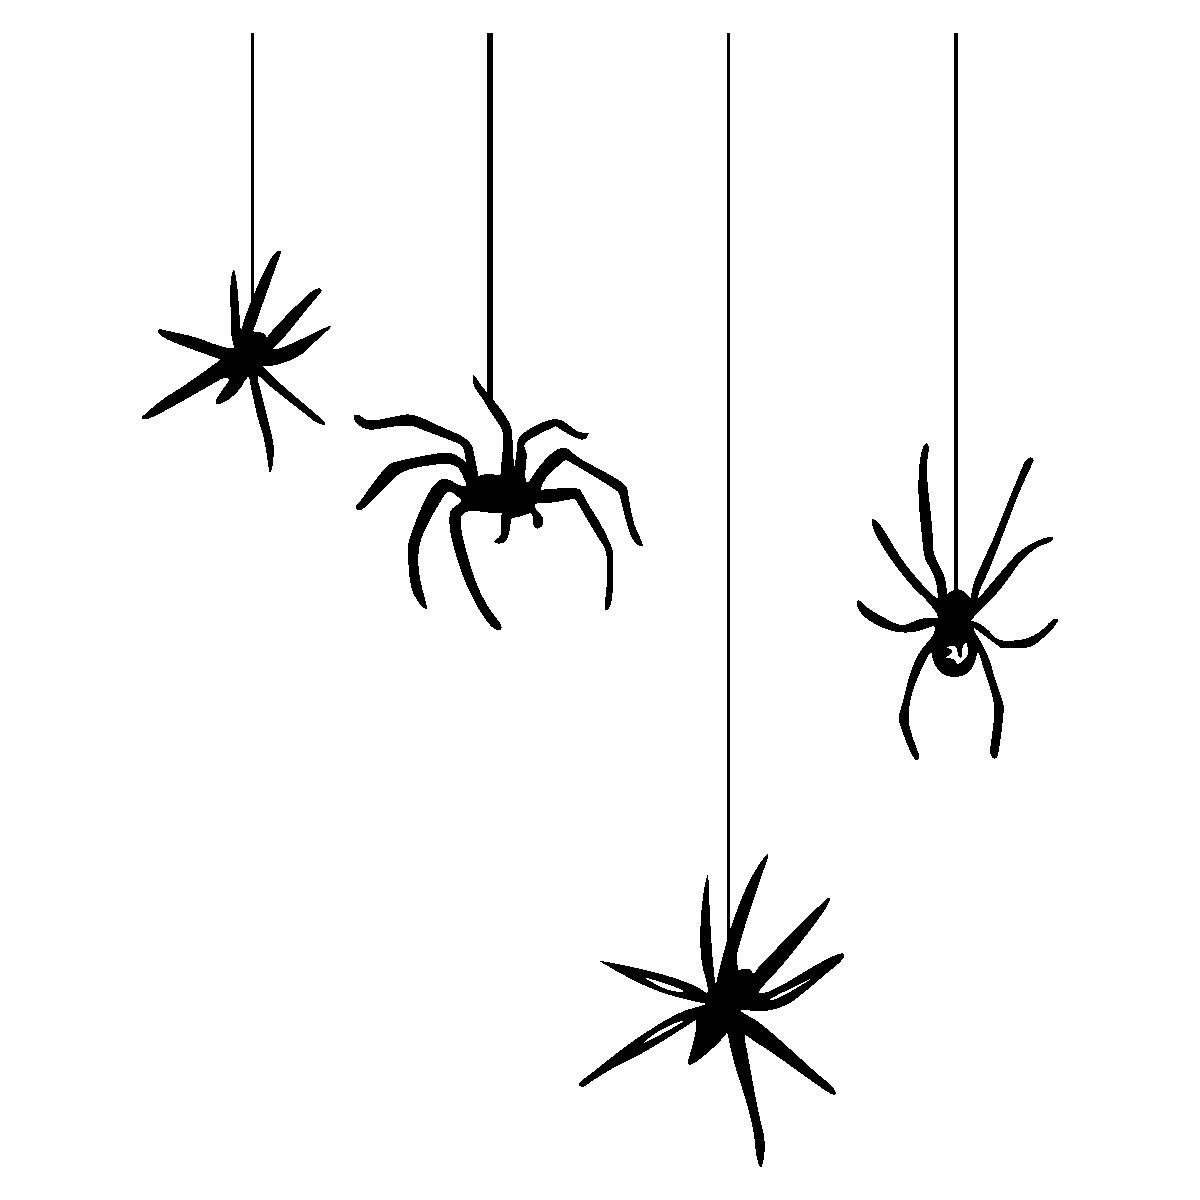 Spider hang